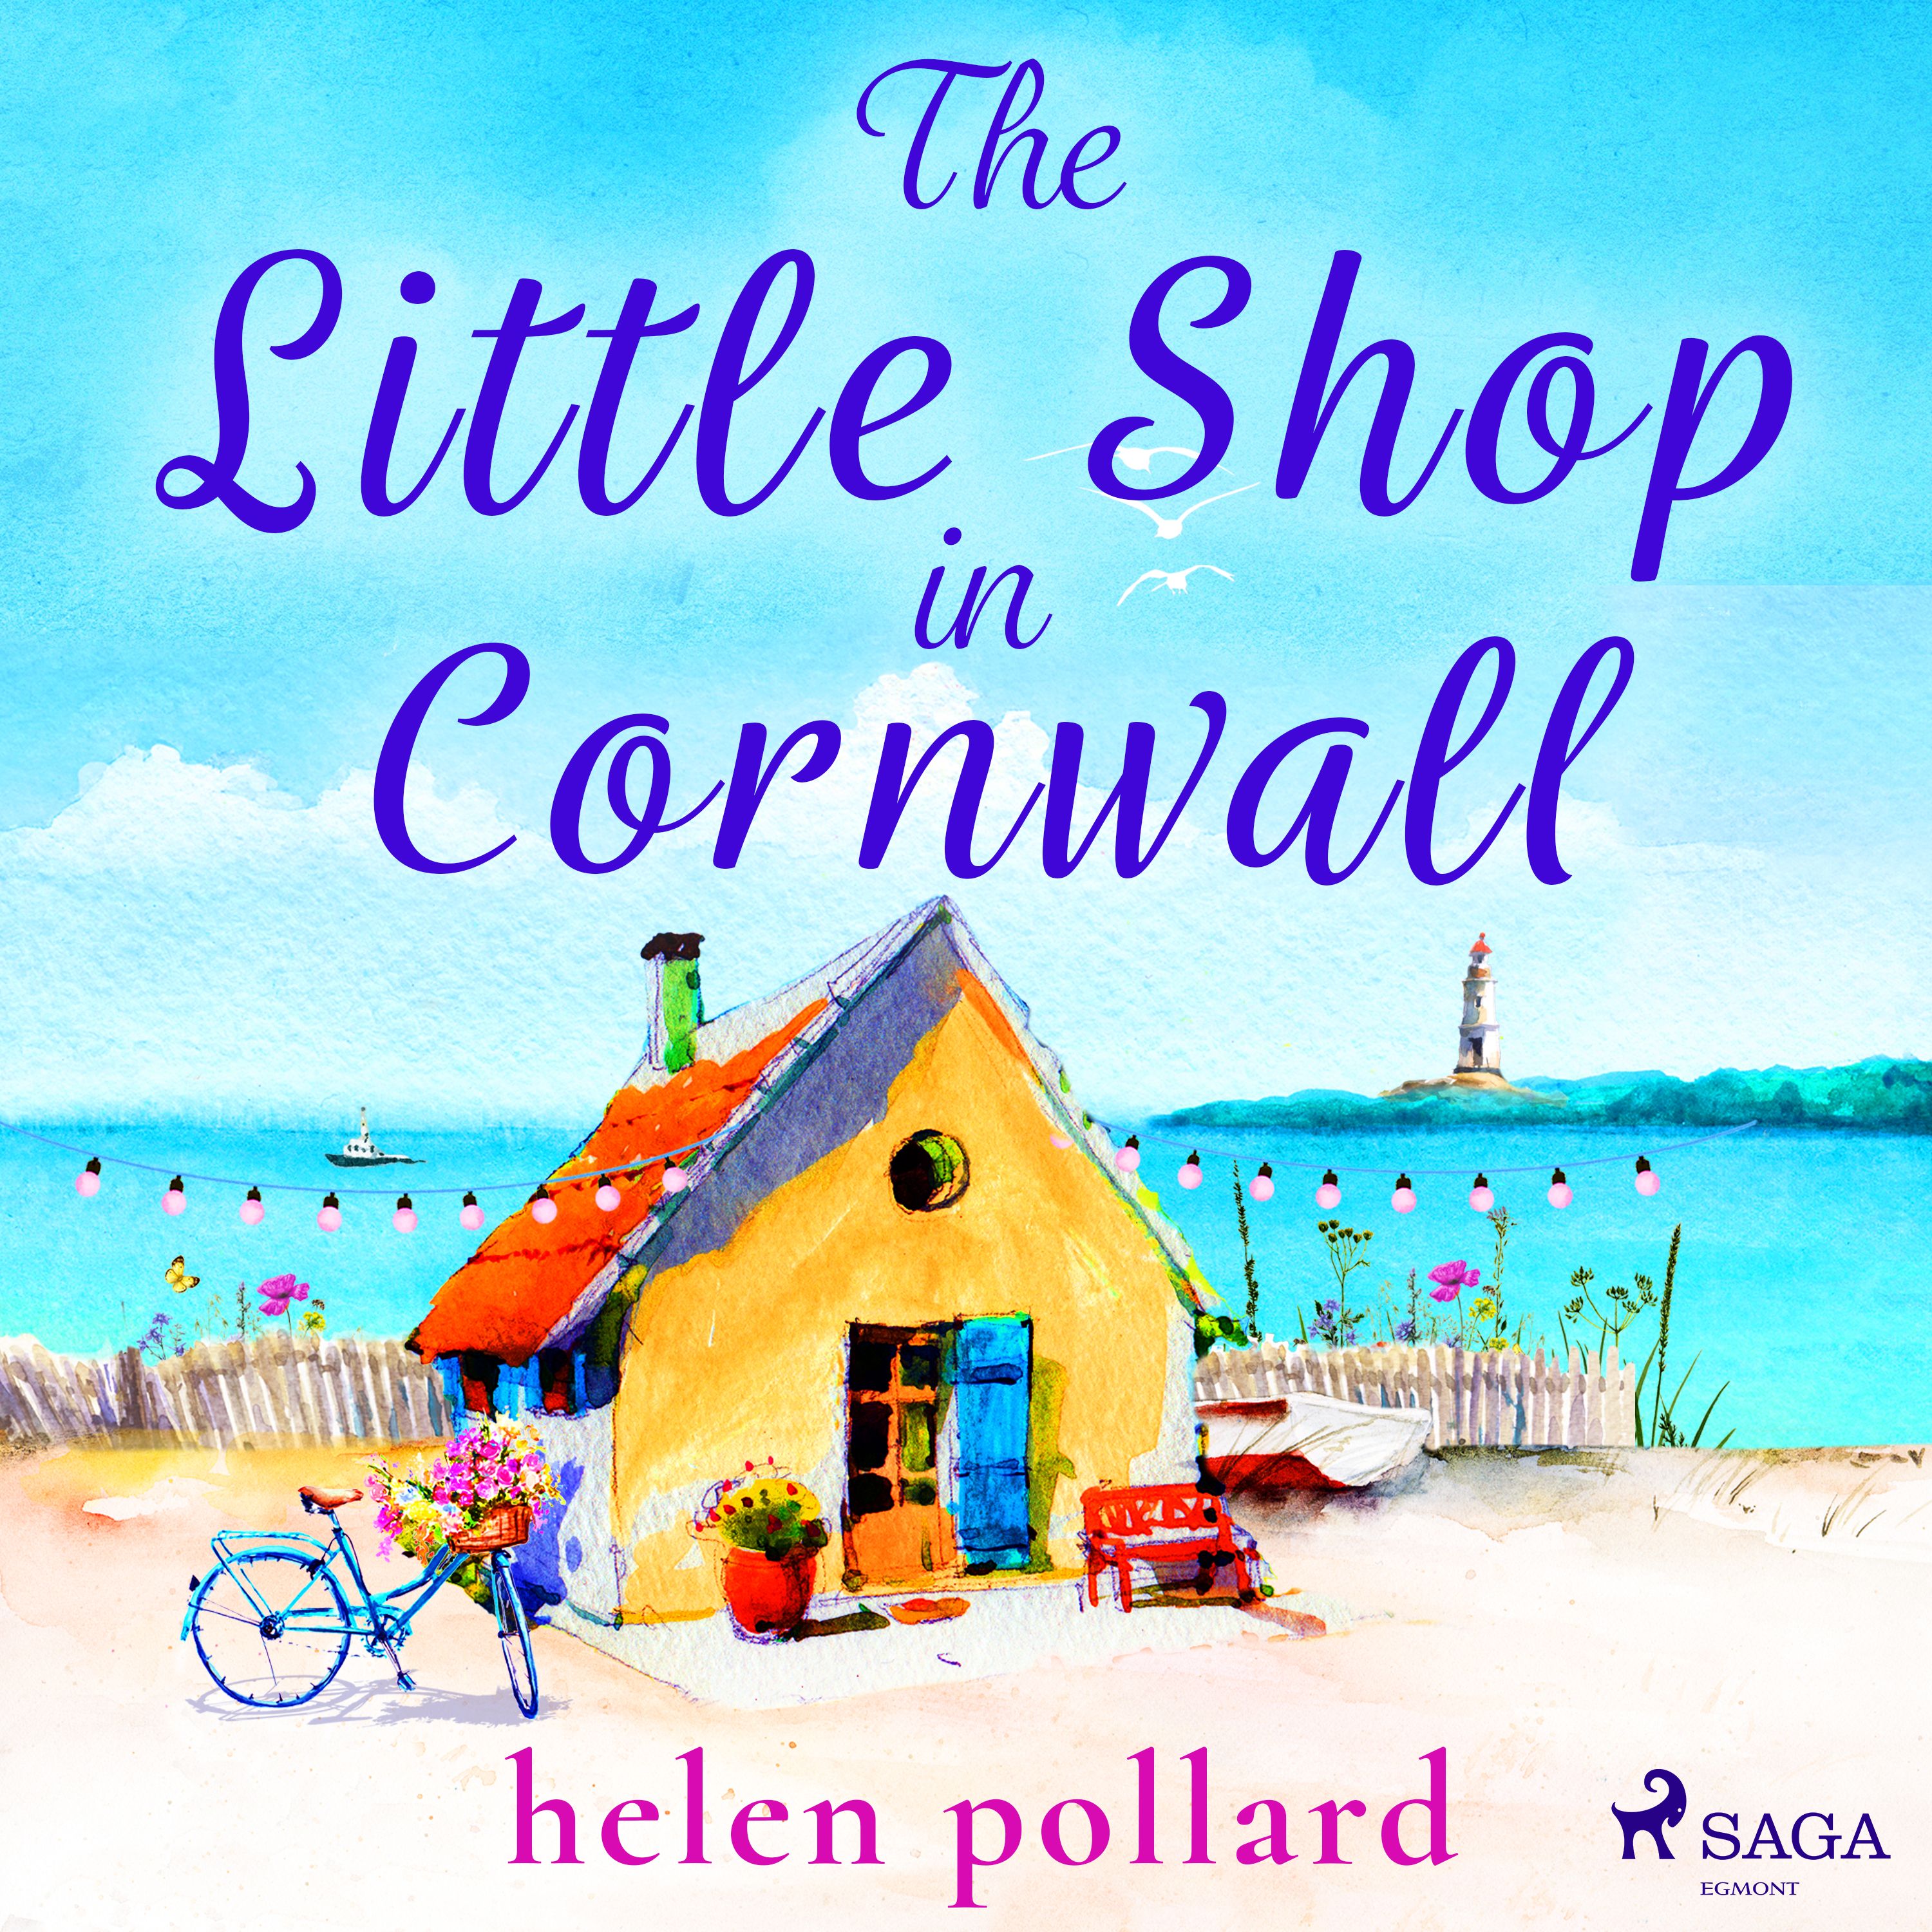 The Little Shop in Cornwall, ljudbok av Helen Pollard